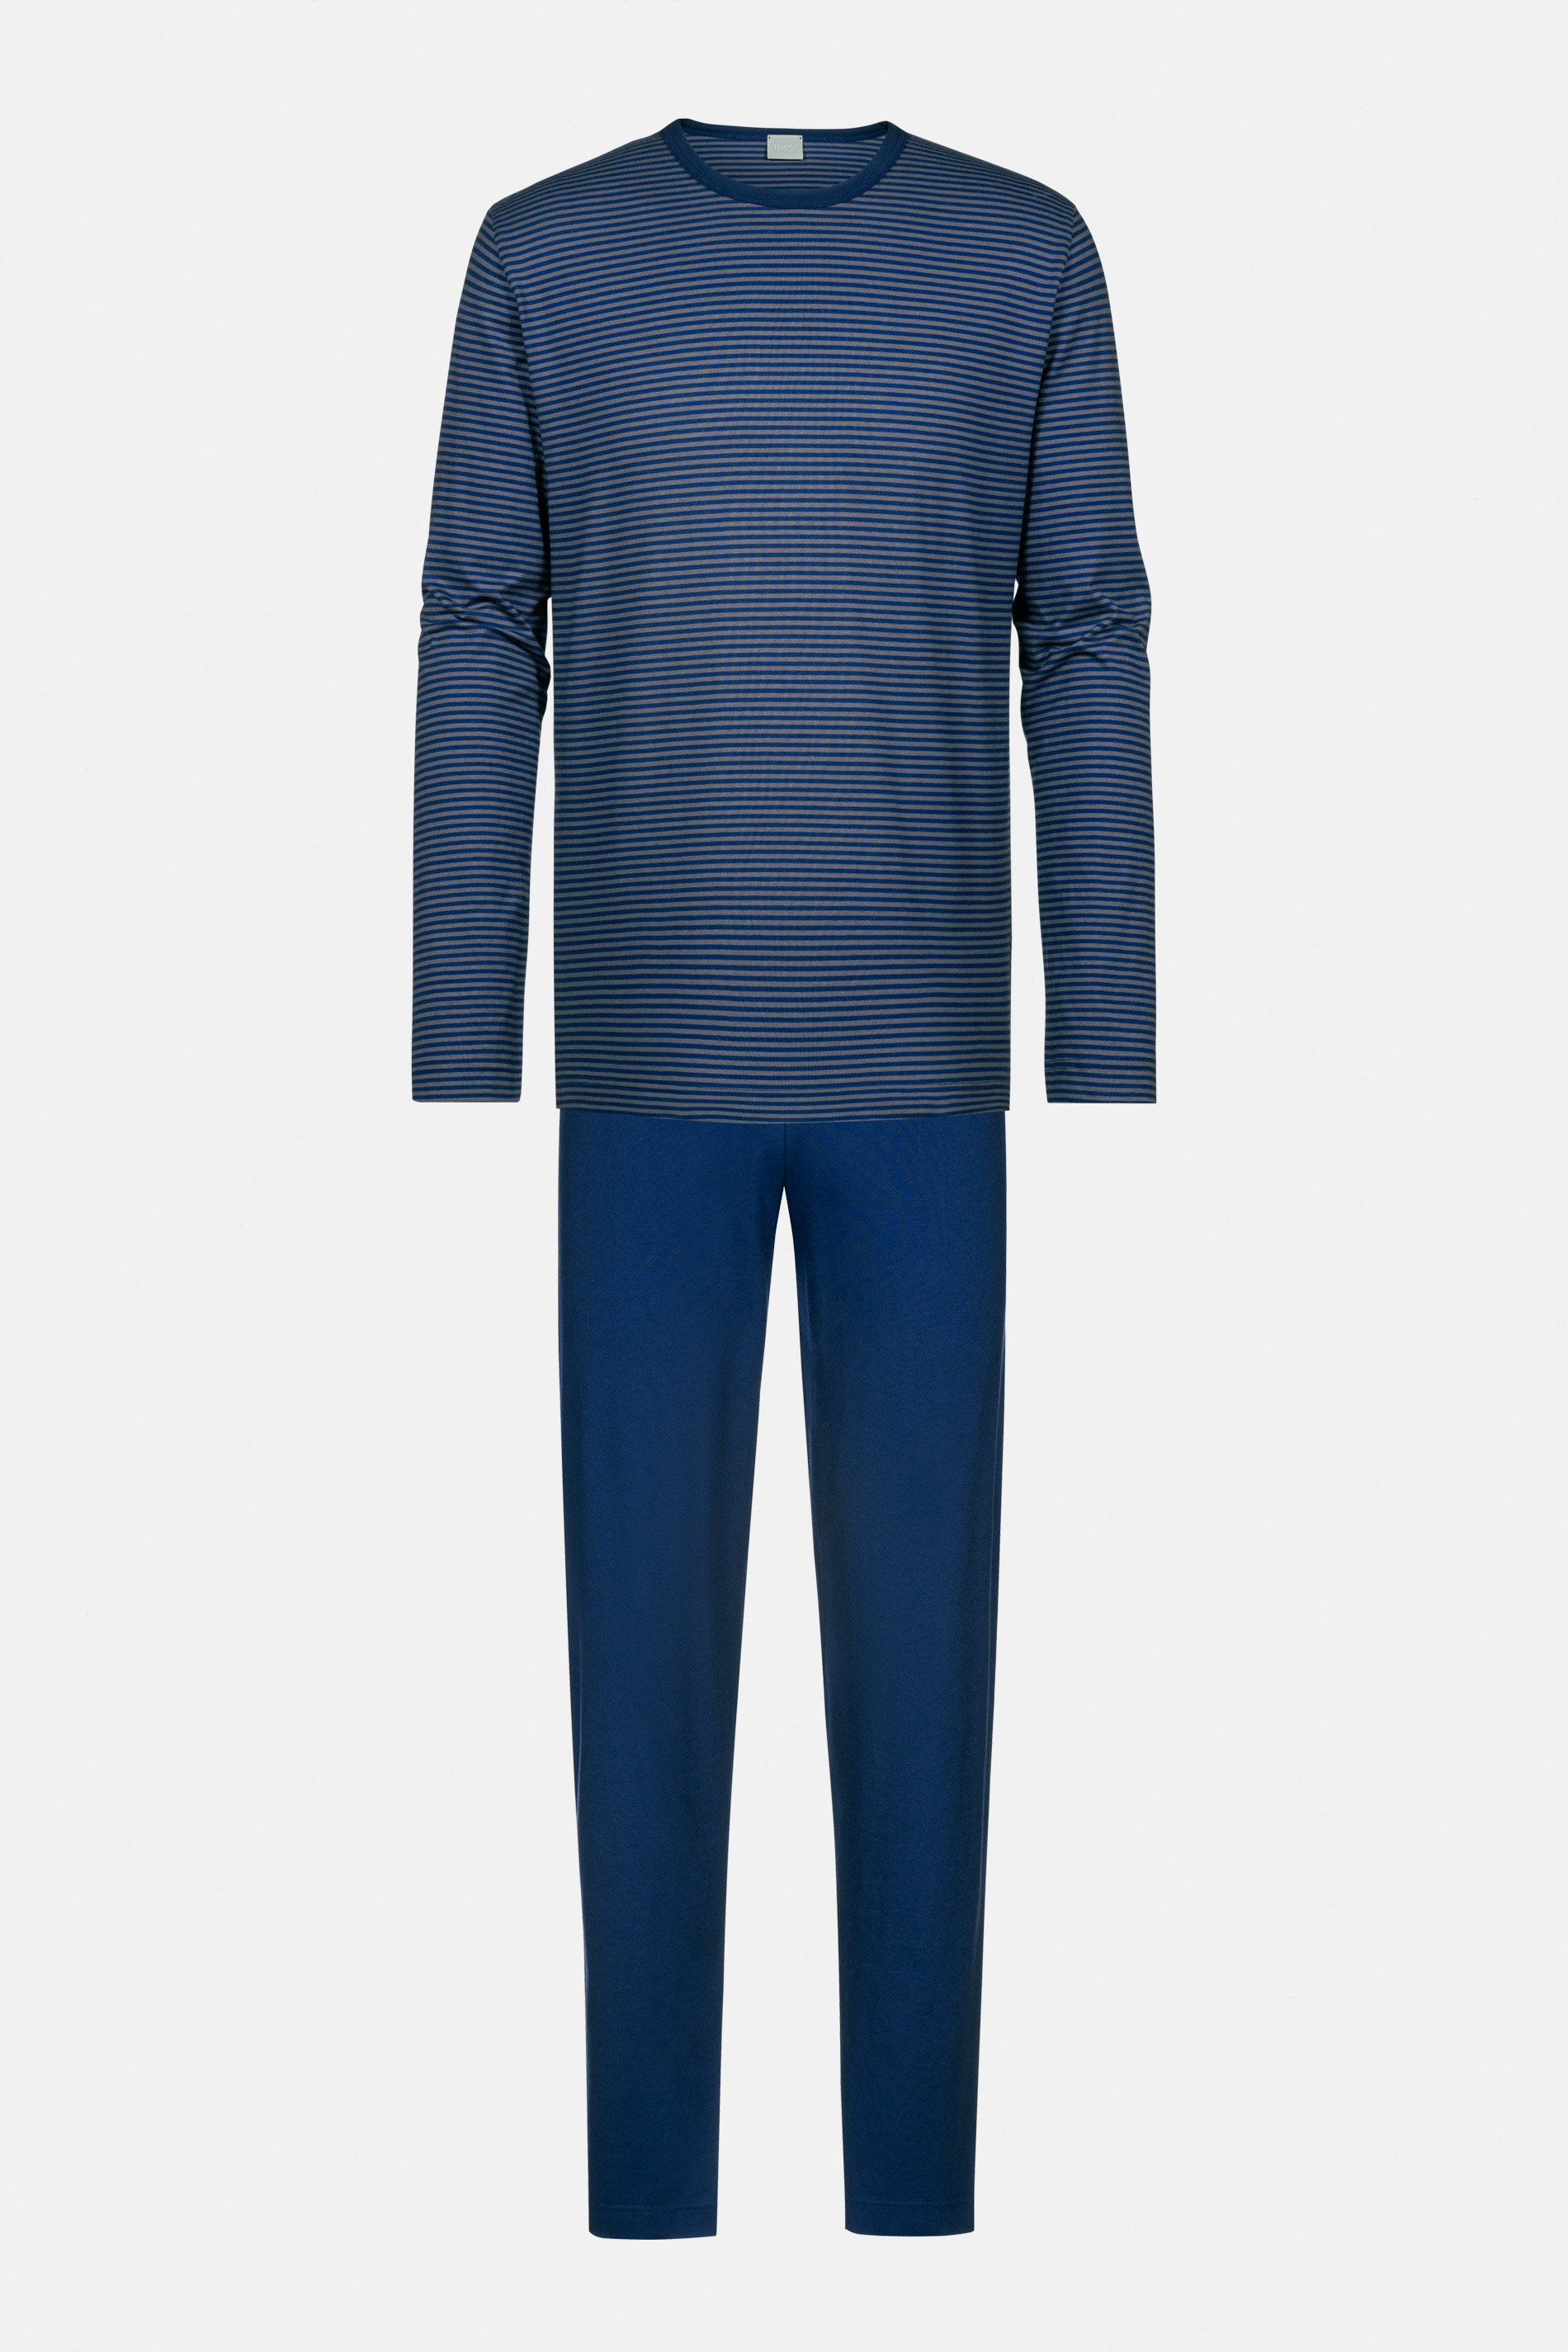 Pyjama Neptune Serie Cardwell Cut Out | mey®